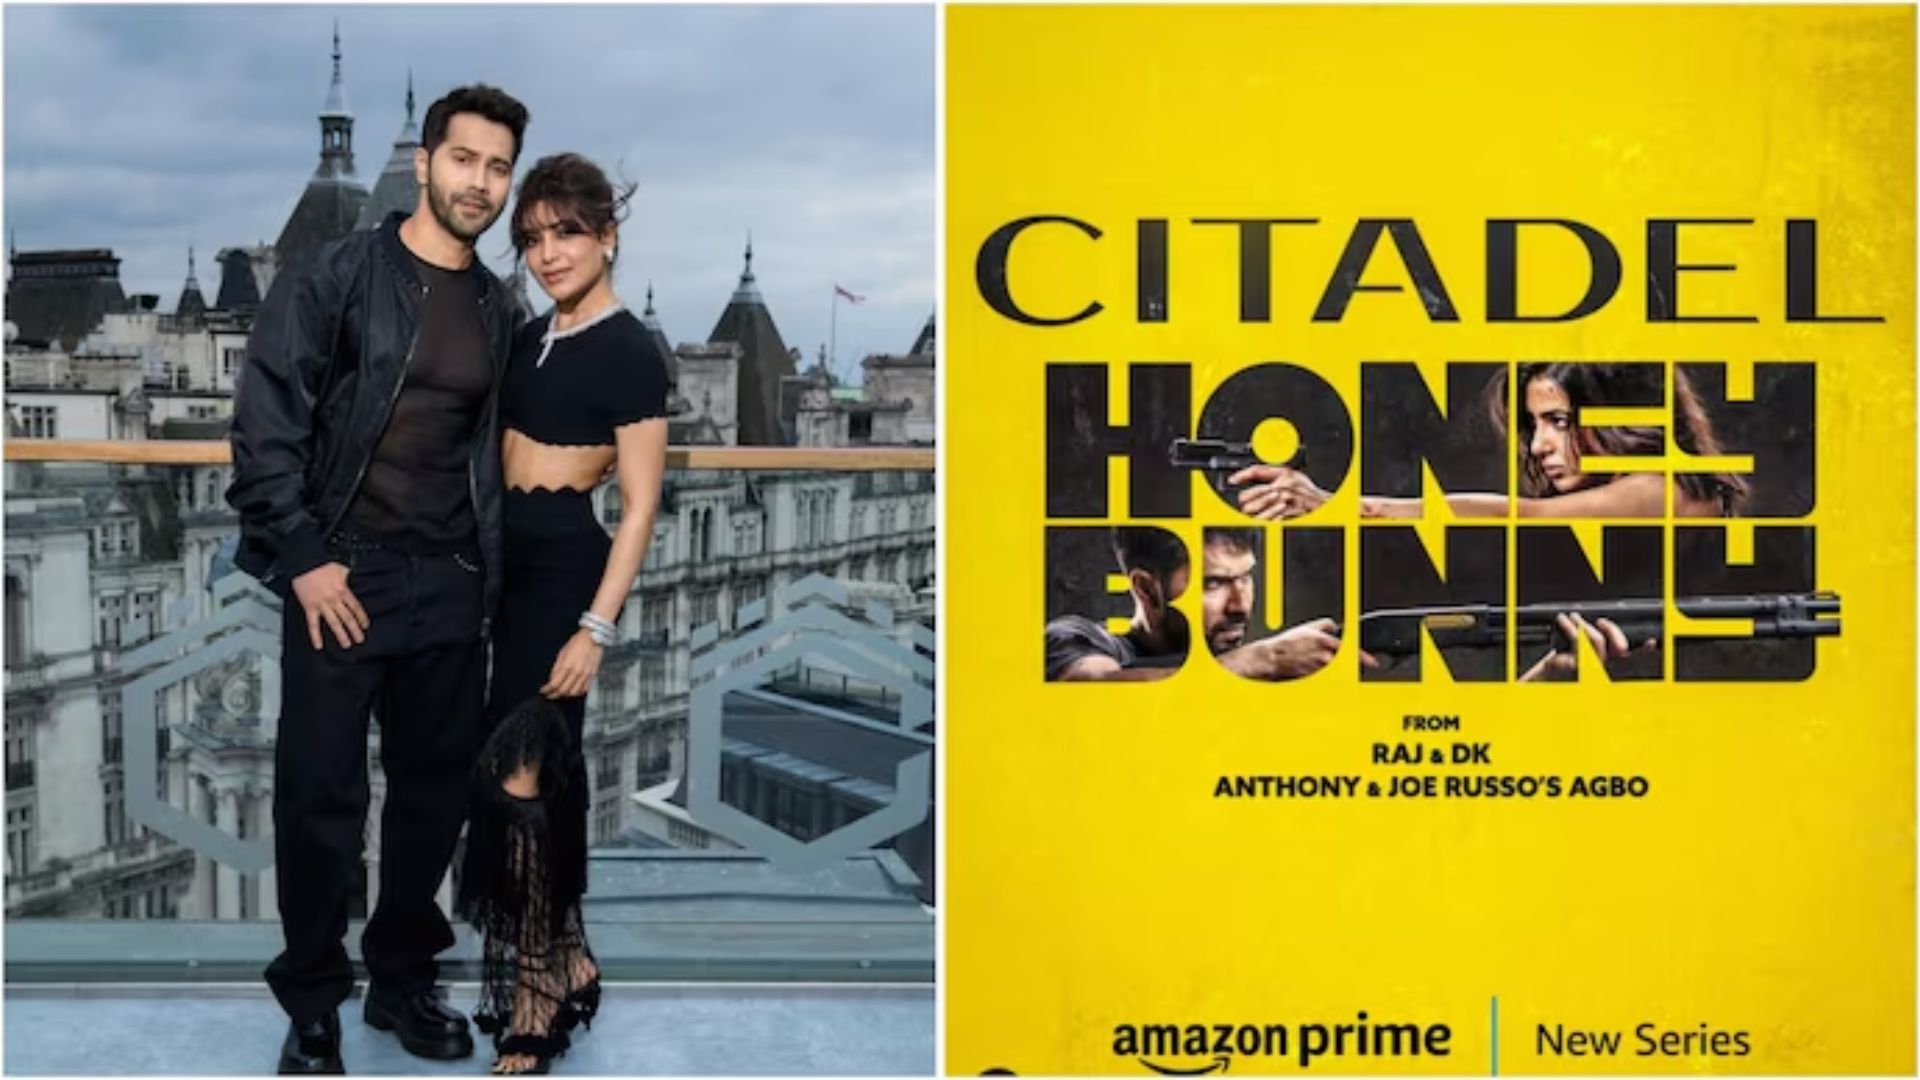 Varun Dhawan, Samantha Ruth Prabhu star in ‘Citadel: Honey Bunny’ thriller series